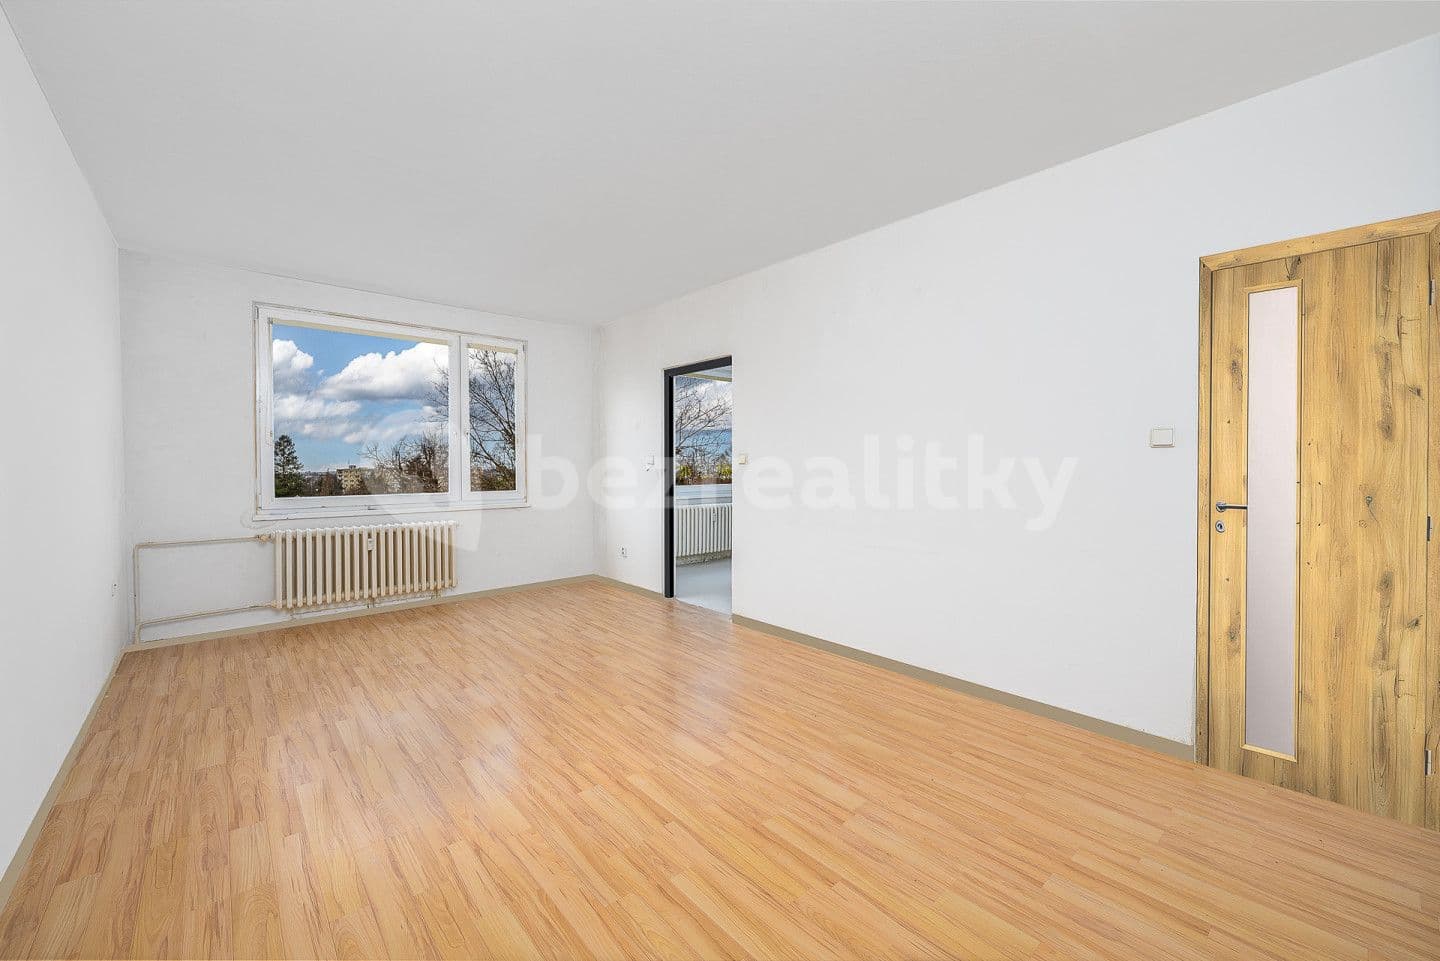 2 bedroom flat for sale, 60 m², U Bažantnice, Heřmanův Městec, Pardubický Region